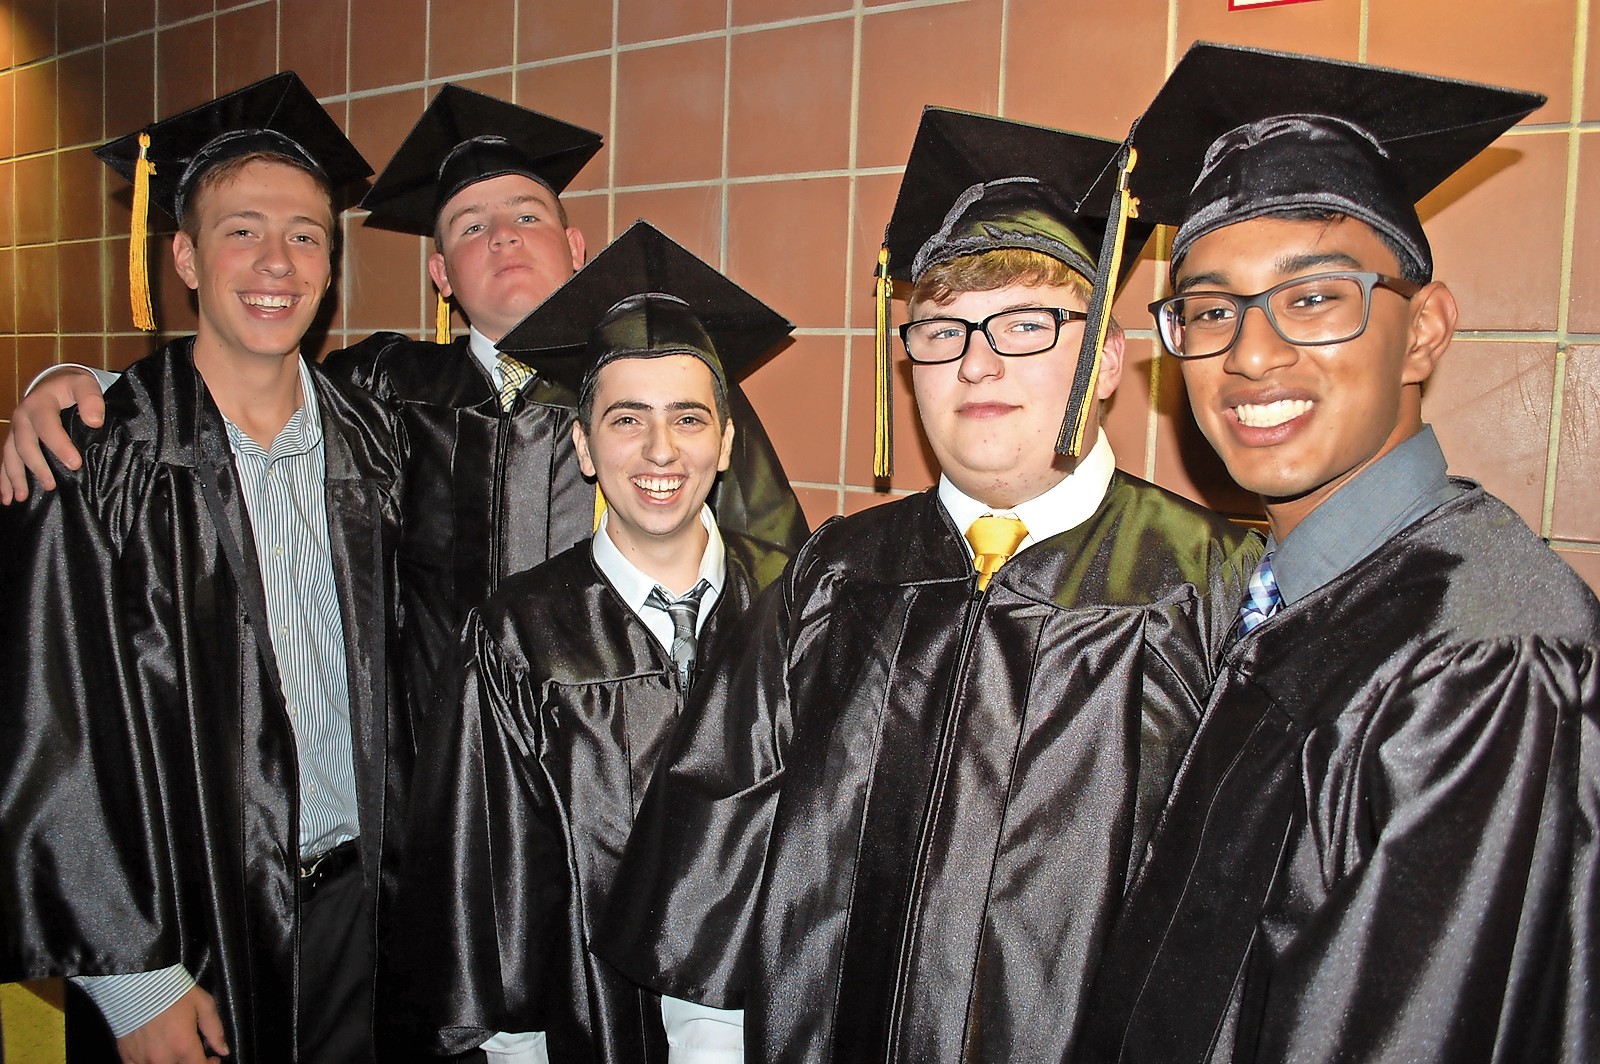 Wantagh High School graduates, from left, Jonathan Tanner, Brendan von Runnen, Emmanuel Yacobov, Alexander Stein and Osama Teepu were part of the school’s 61st class.